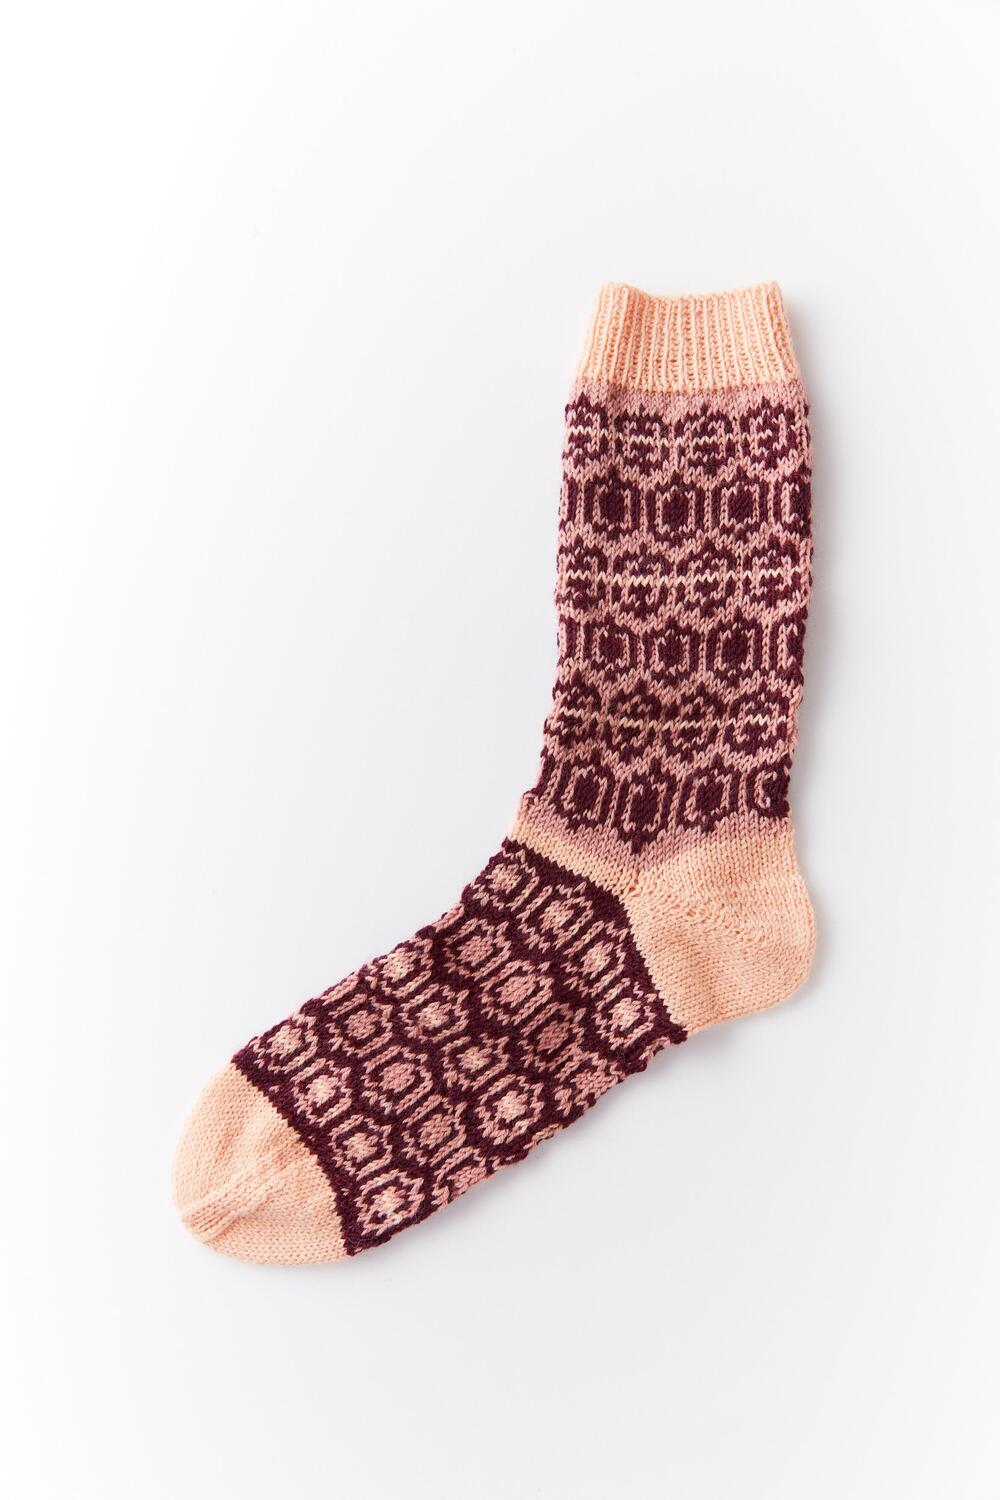 Bild: 9783735870926 | Mismatched Socks | Mustersocken stricken, kombinieren, verschenken